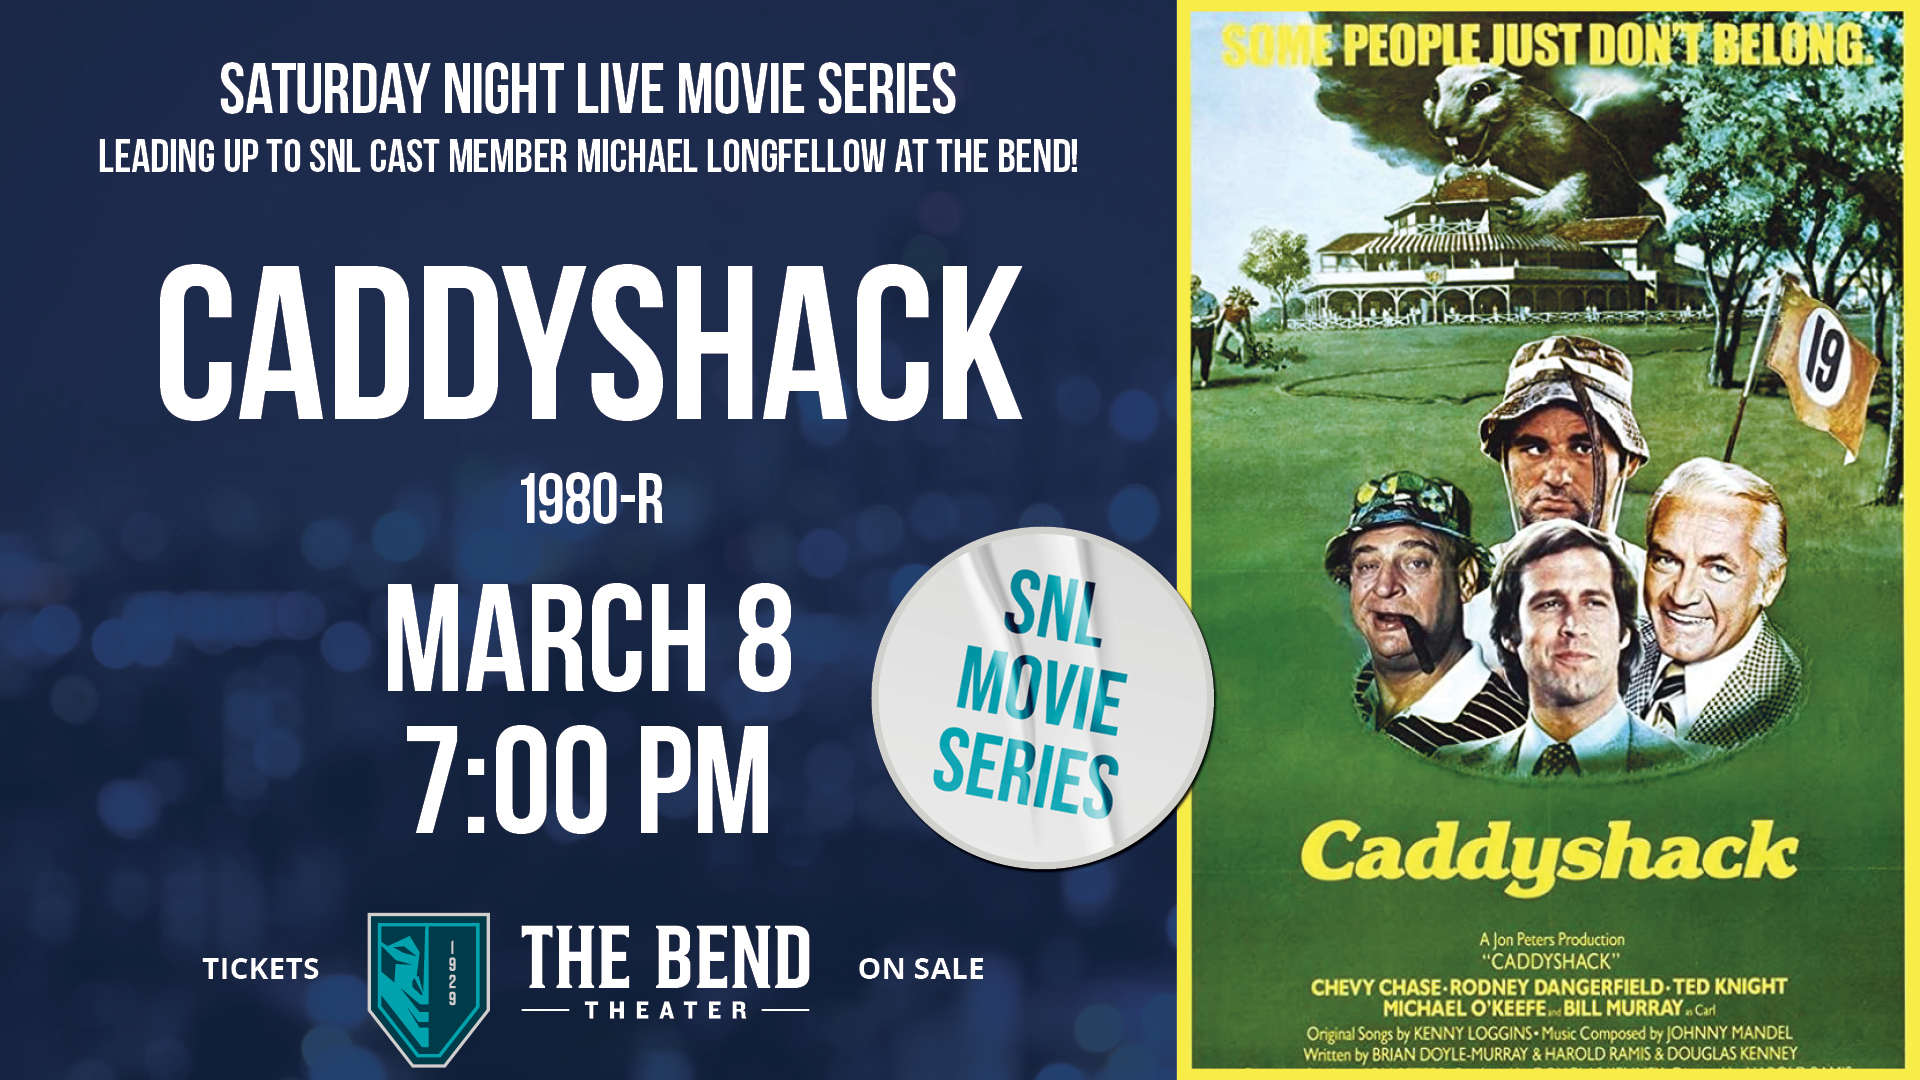 Saturday Night Live Movie Series Caddyshack